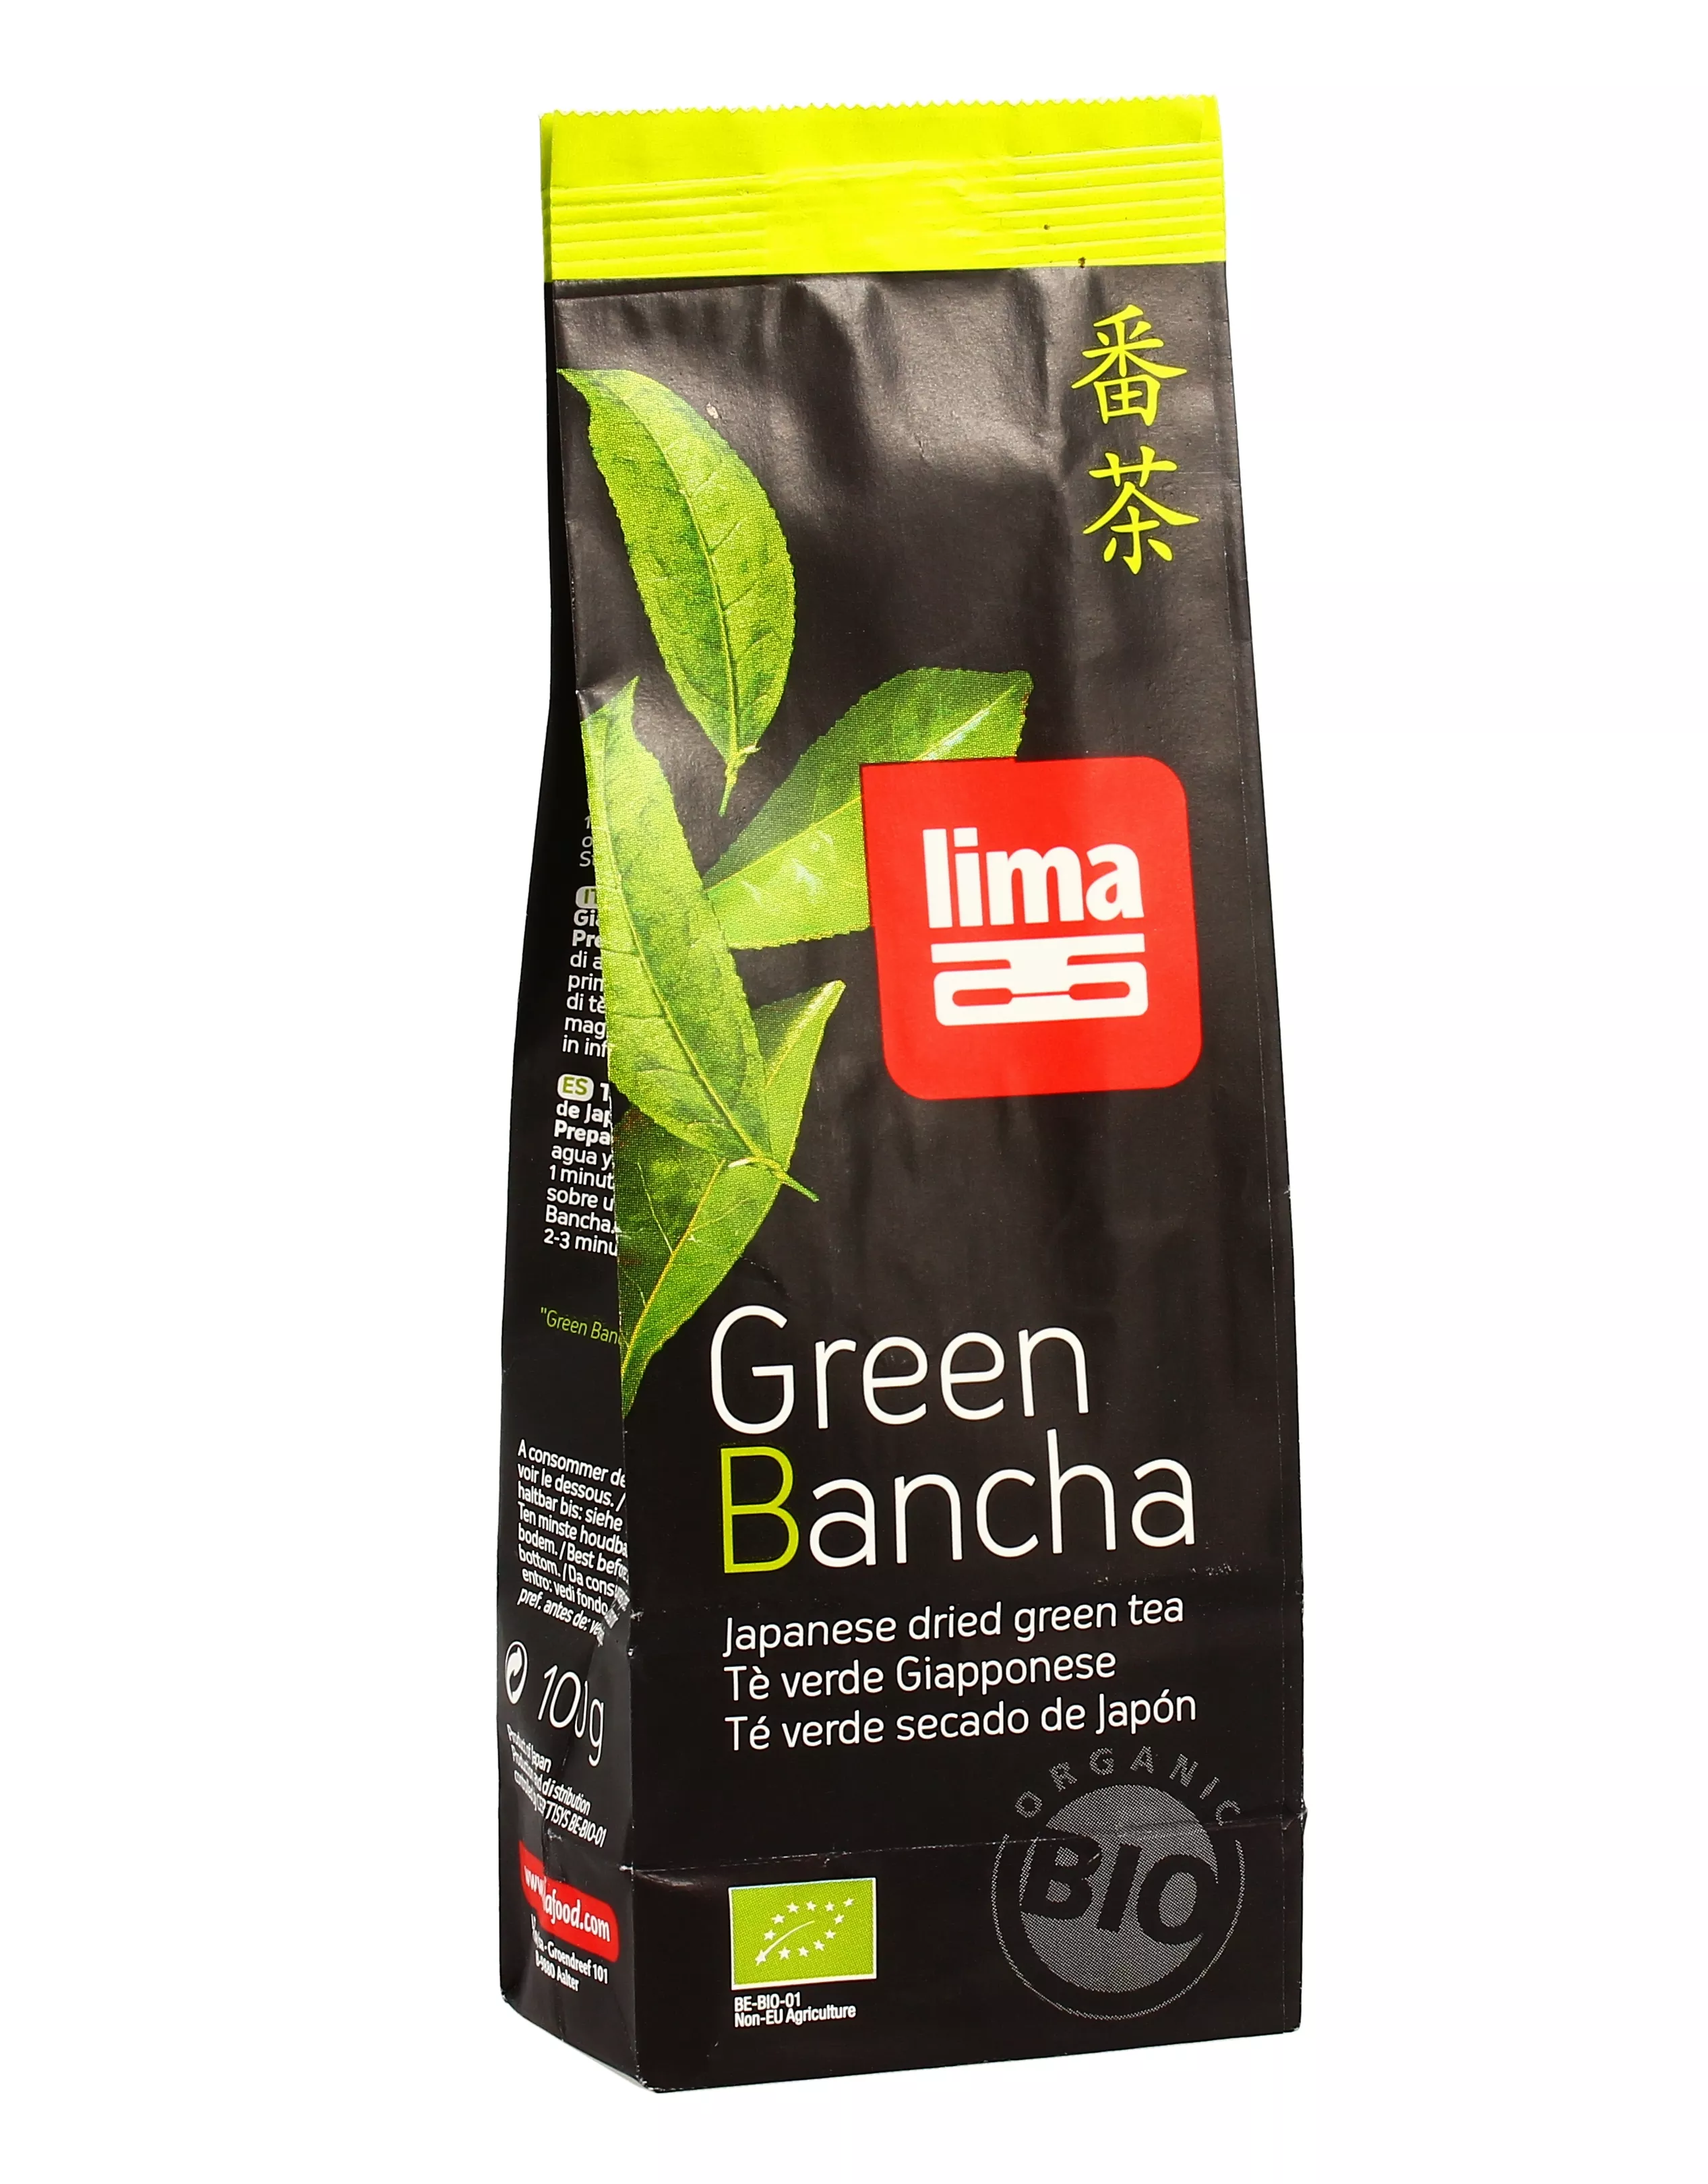 Green Bancha - Tè Verde Bancha in Foglie (Sfuso) - Lima